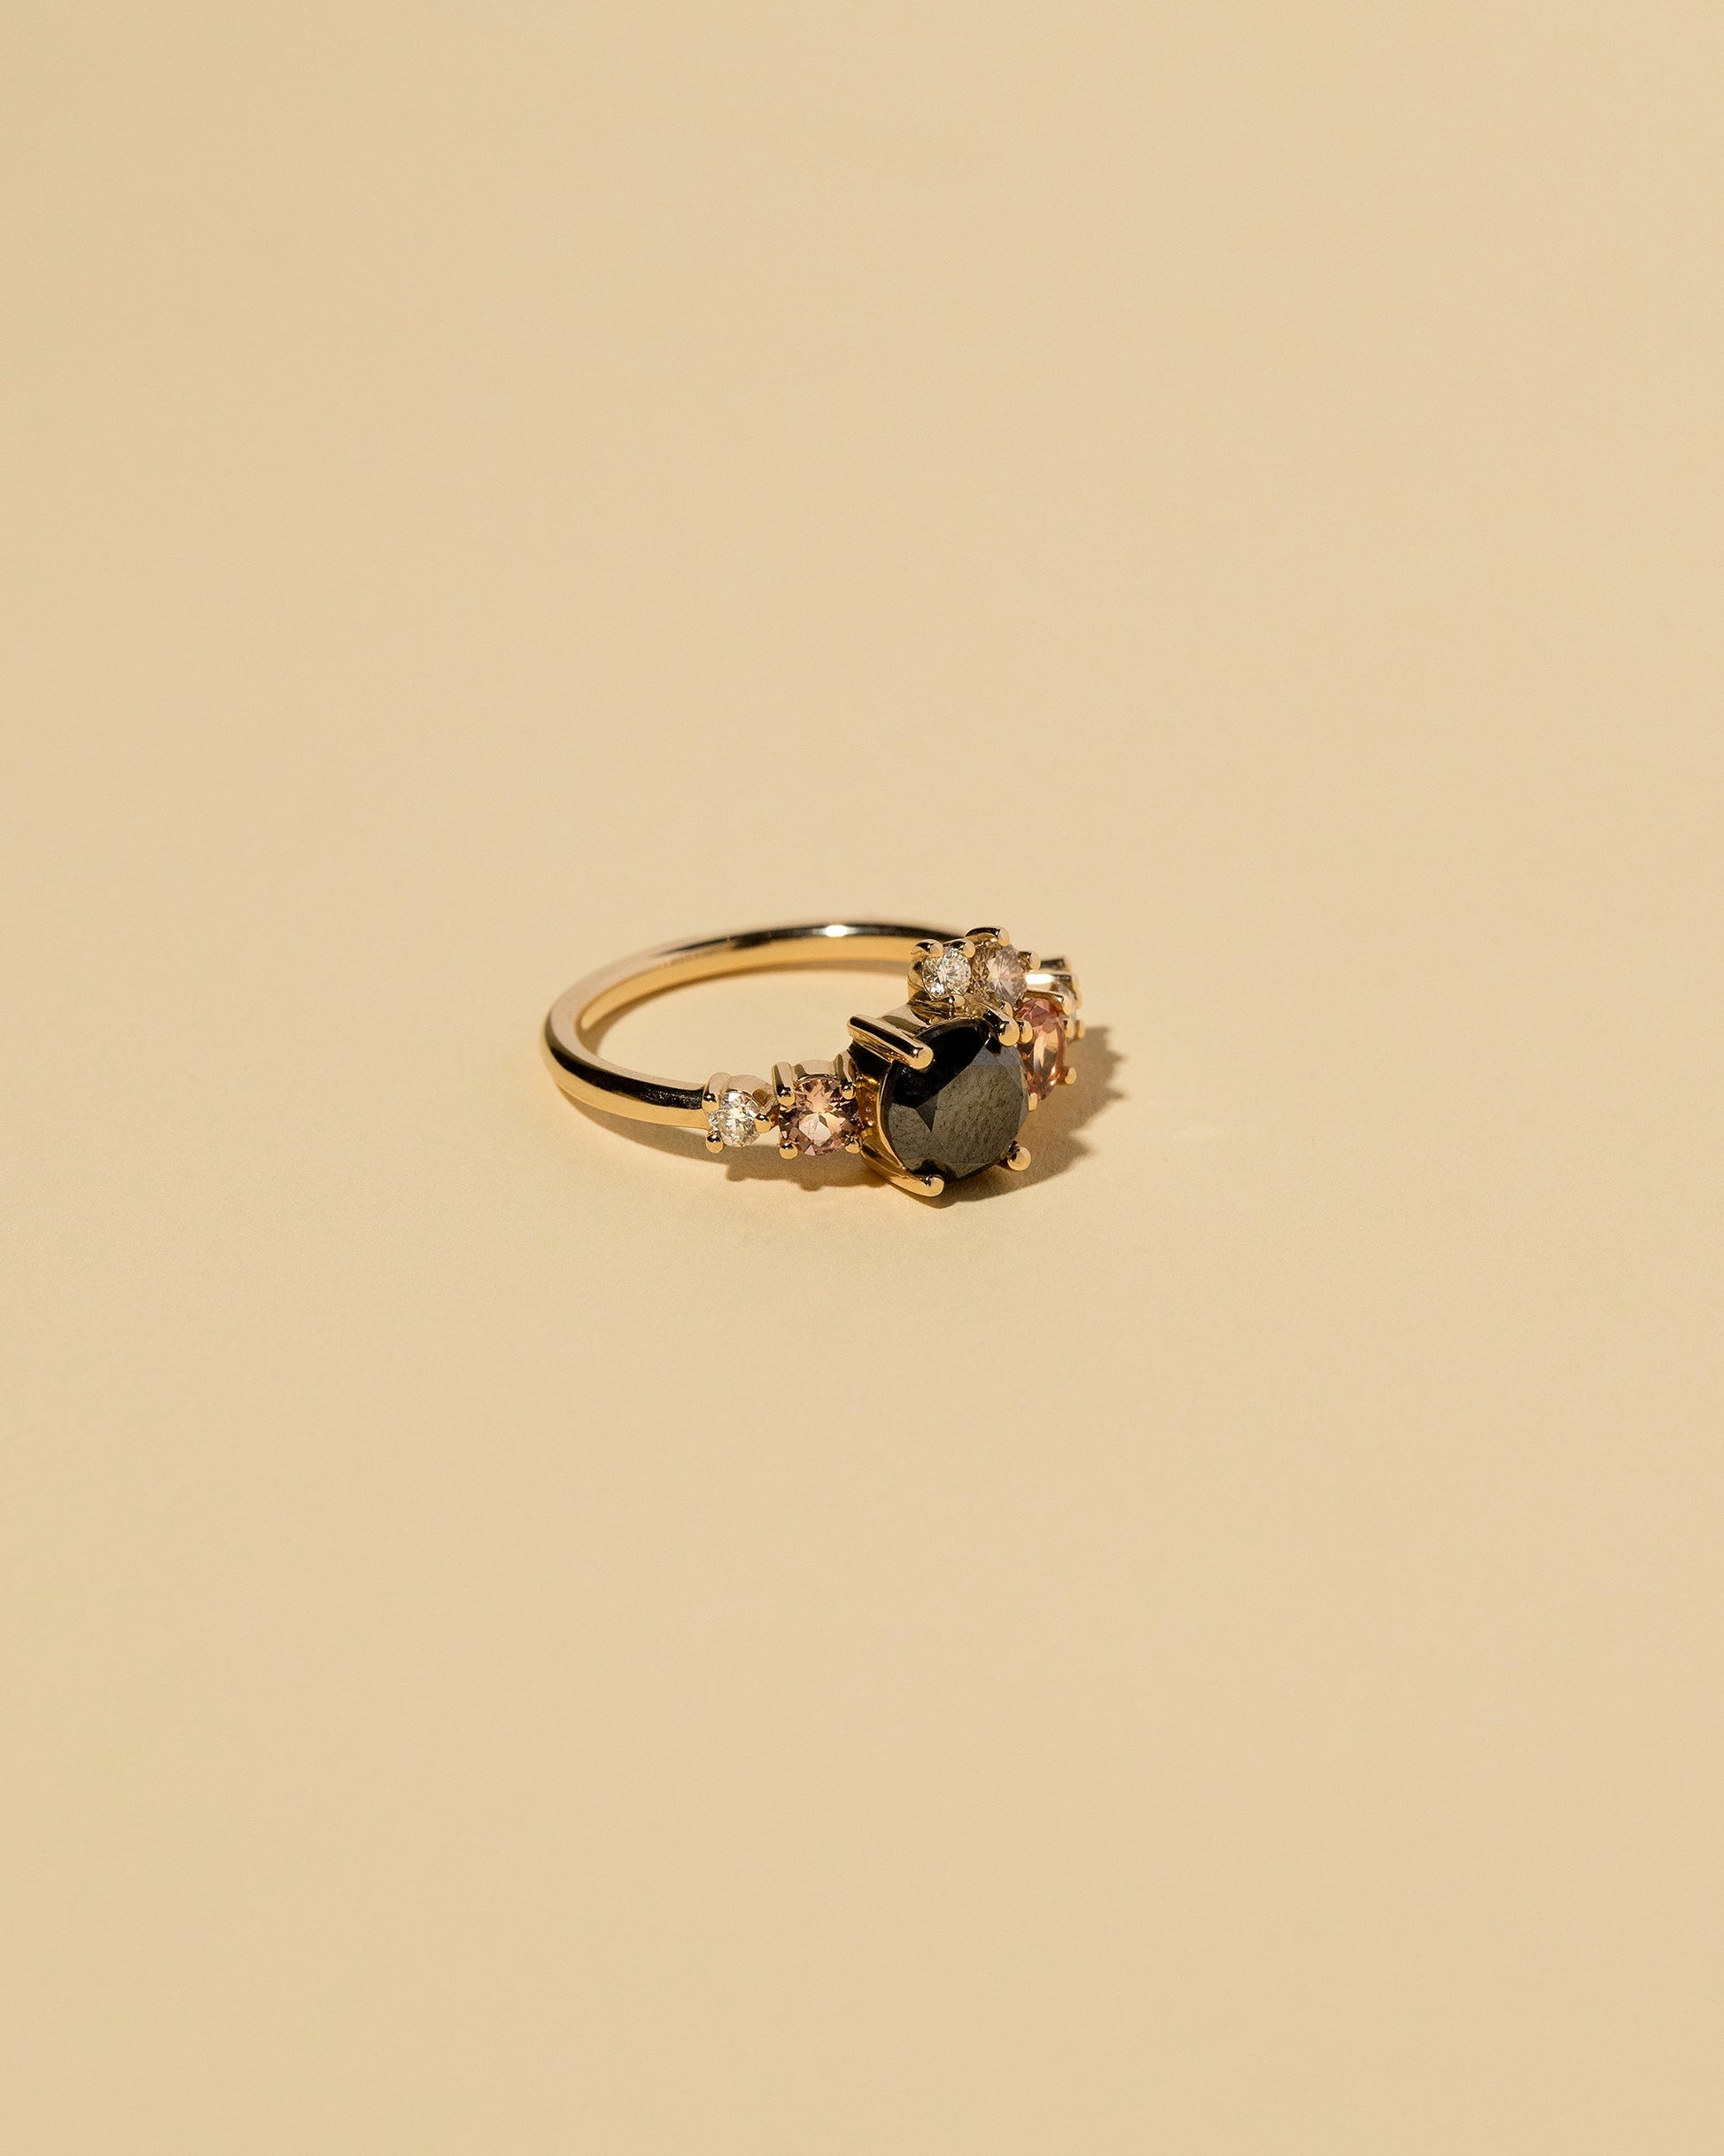  Luna Ring - Black Diamond on light color background.